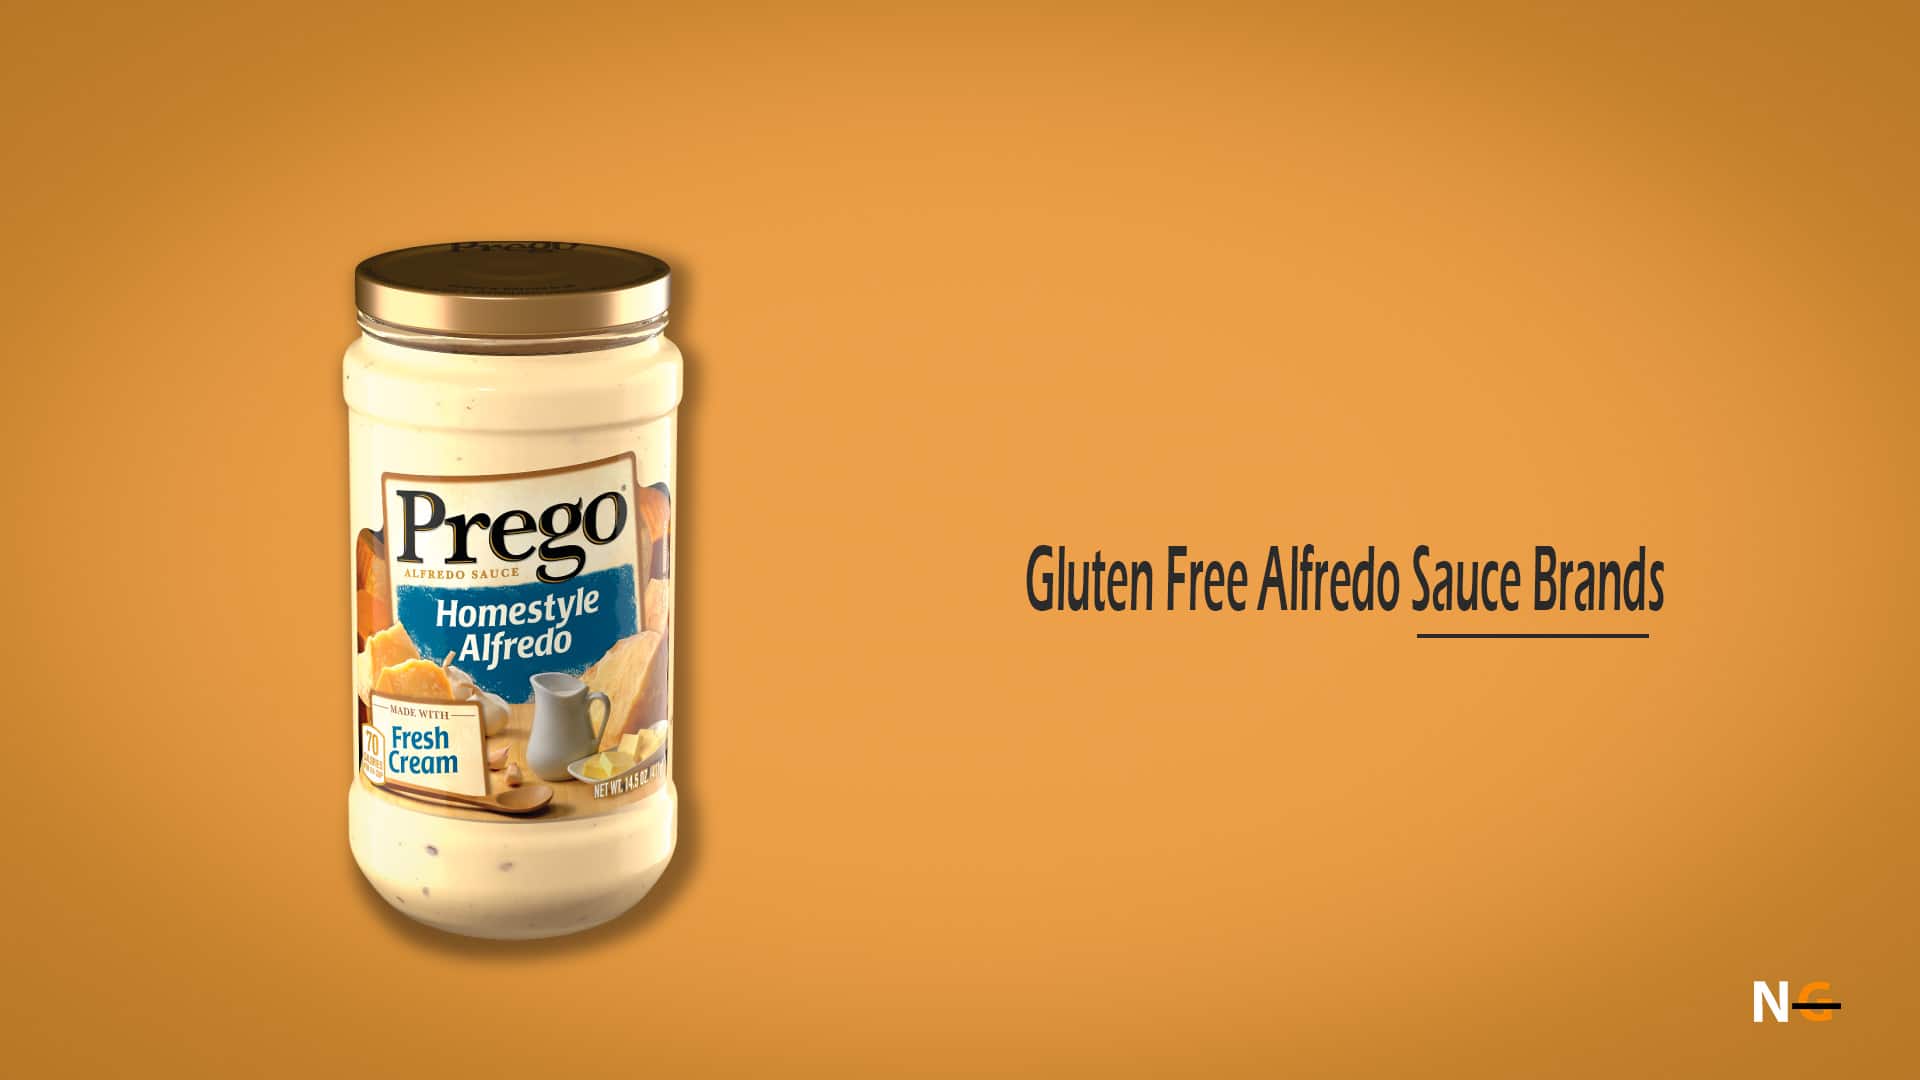 Gluten Free Alfredo Sauce Brands